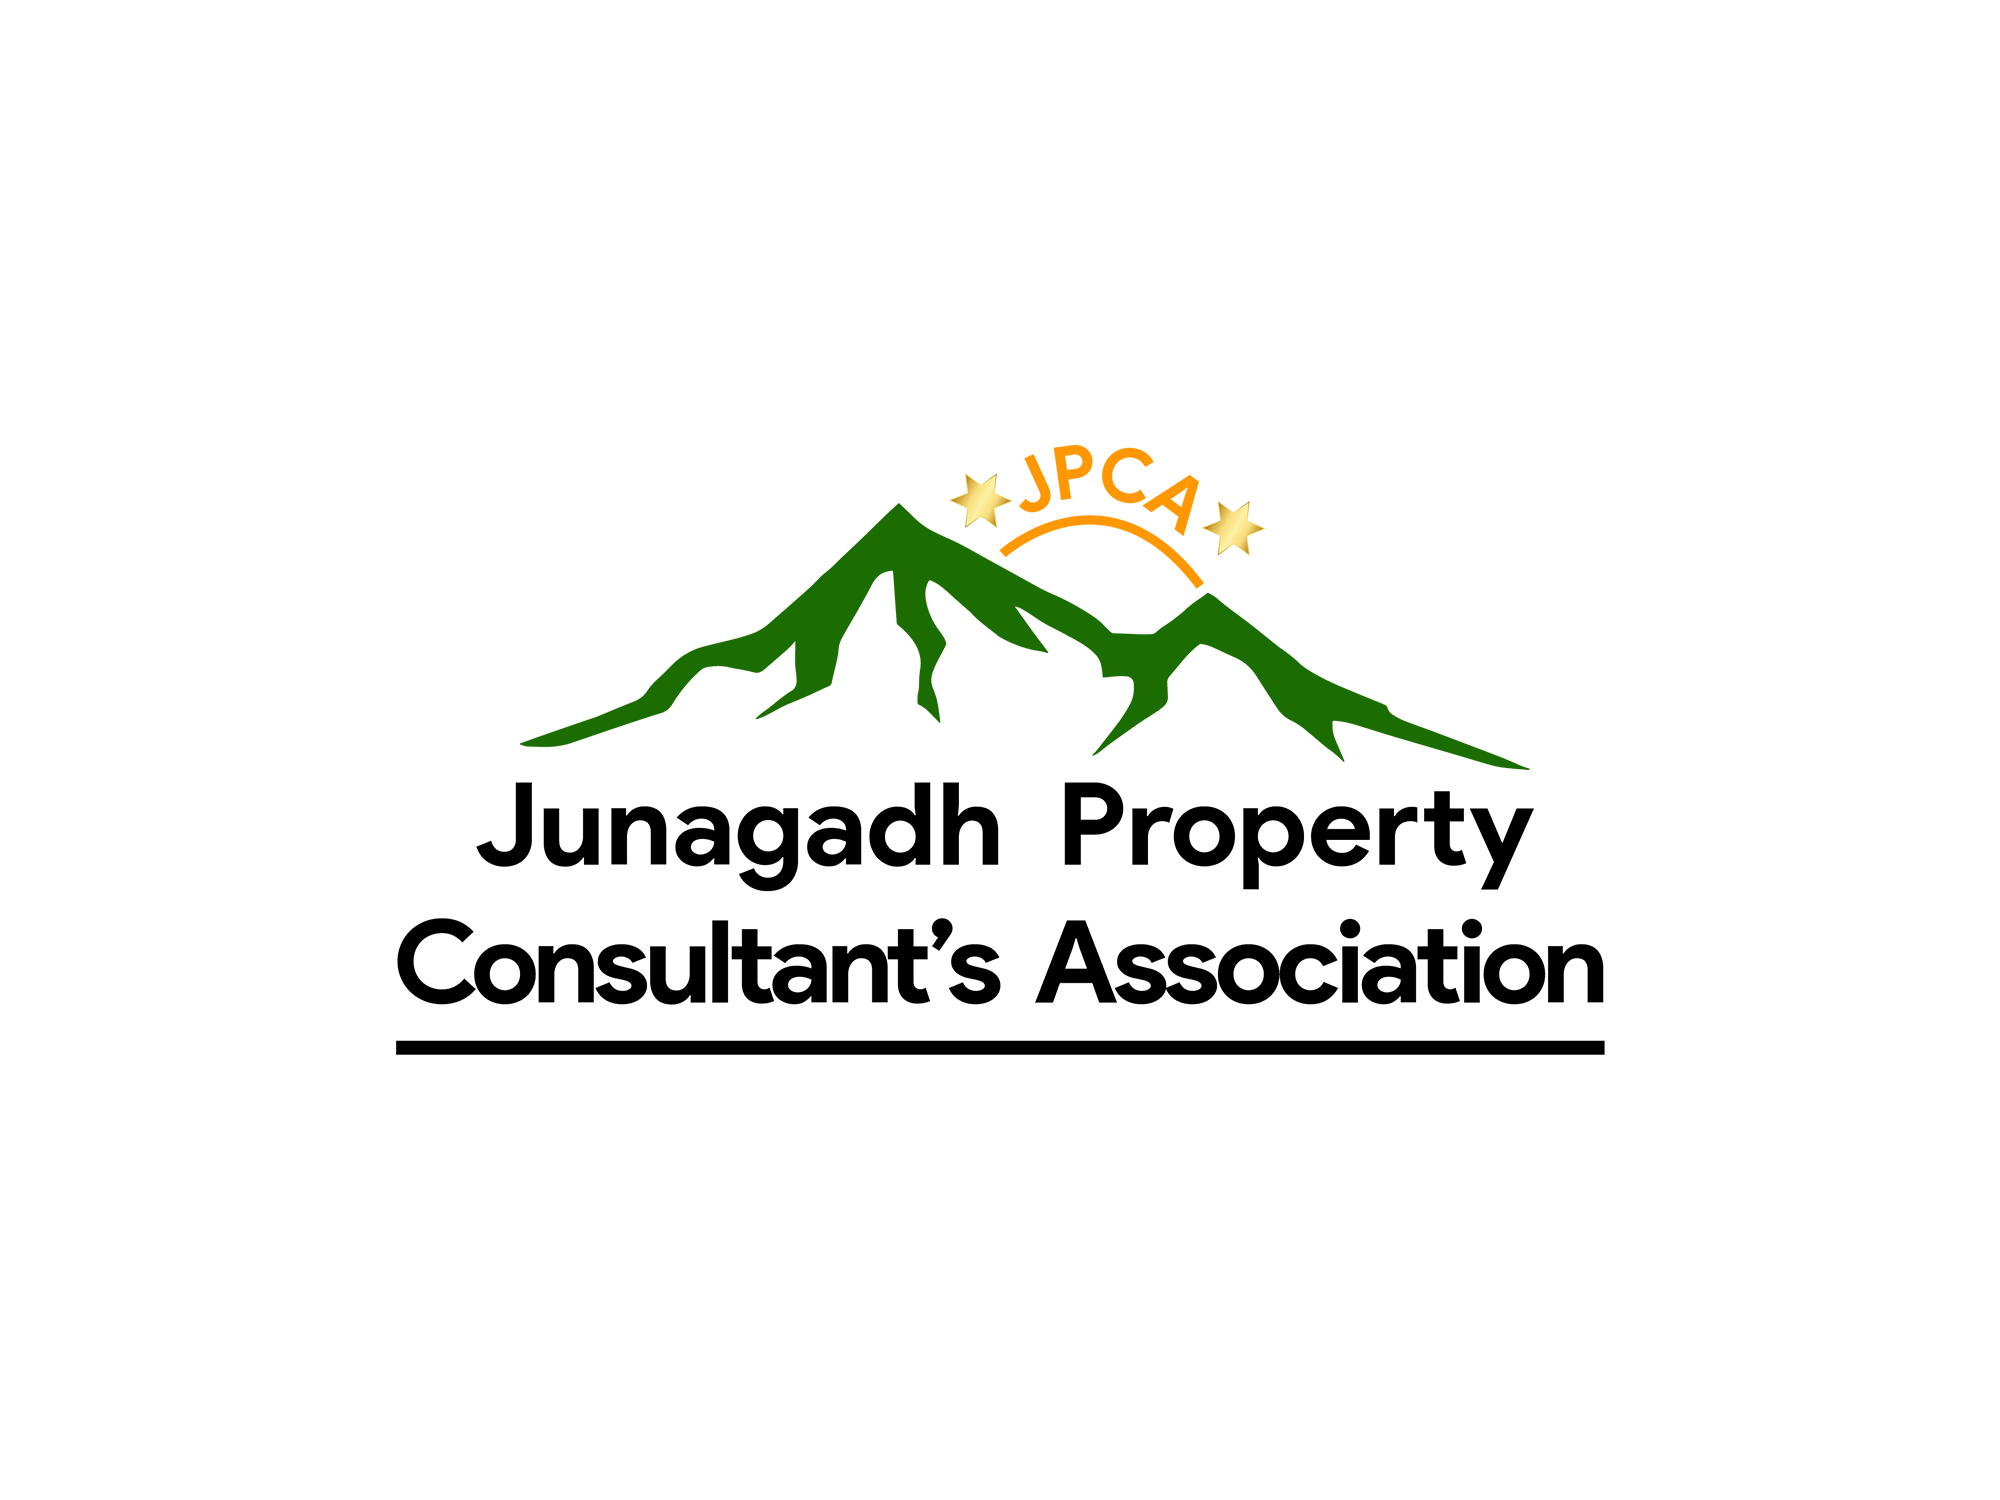 Junagadh Propery Consultant's Association